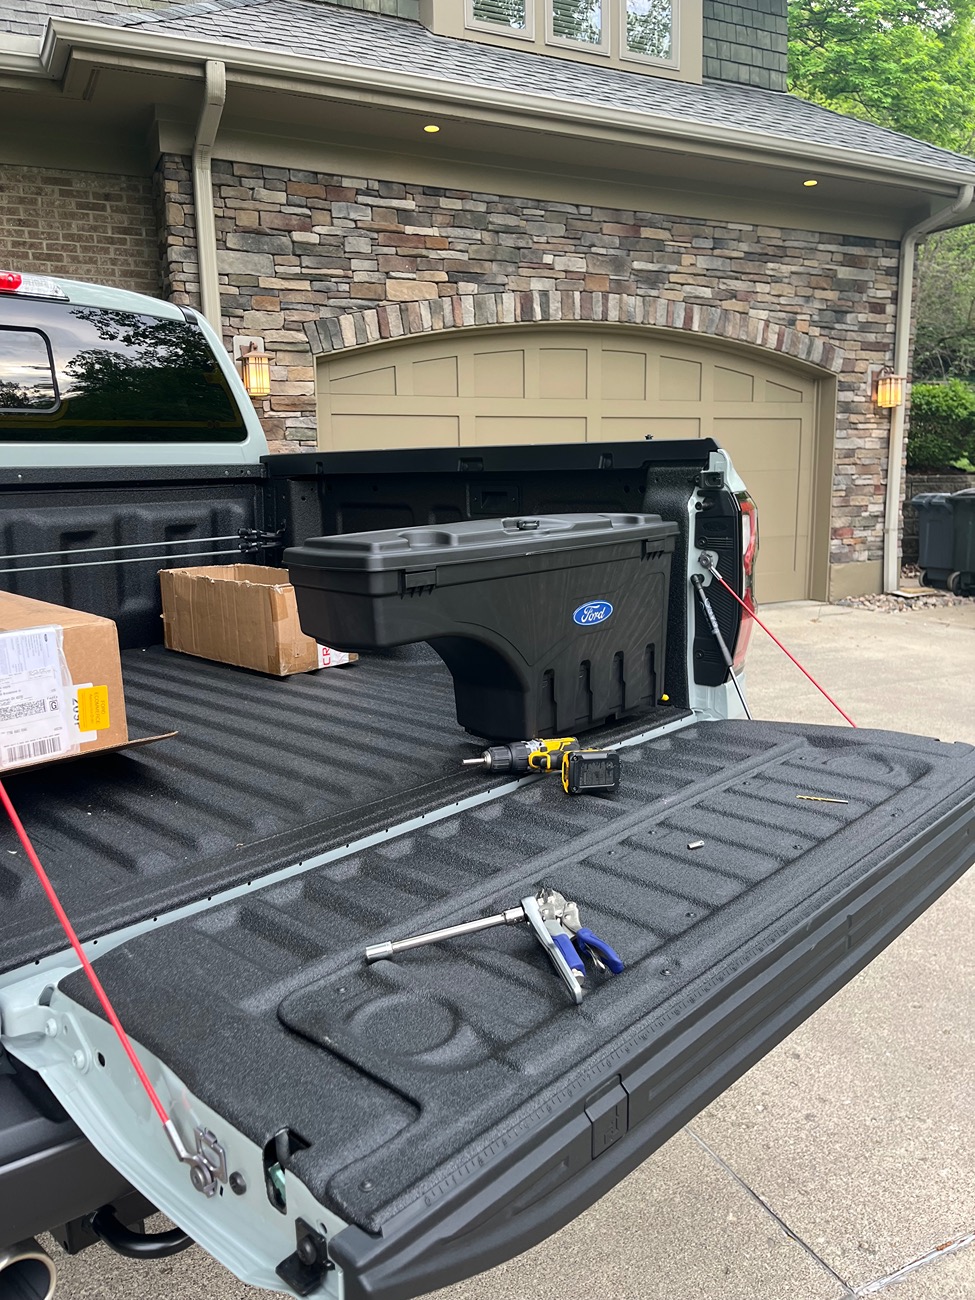 Ford Ranger Ford storage bins (pivot storage box) installed in bed IMG_6465